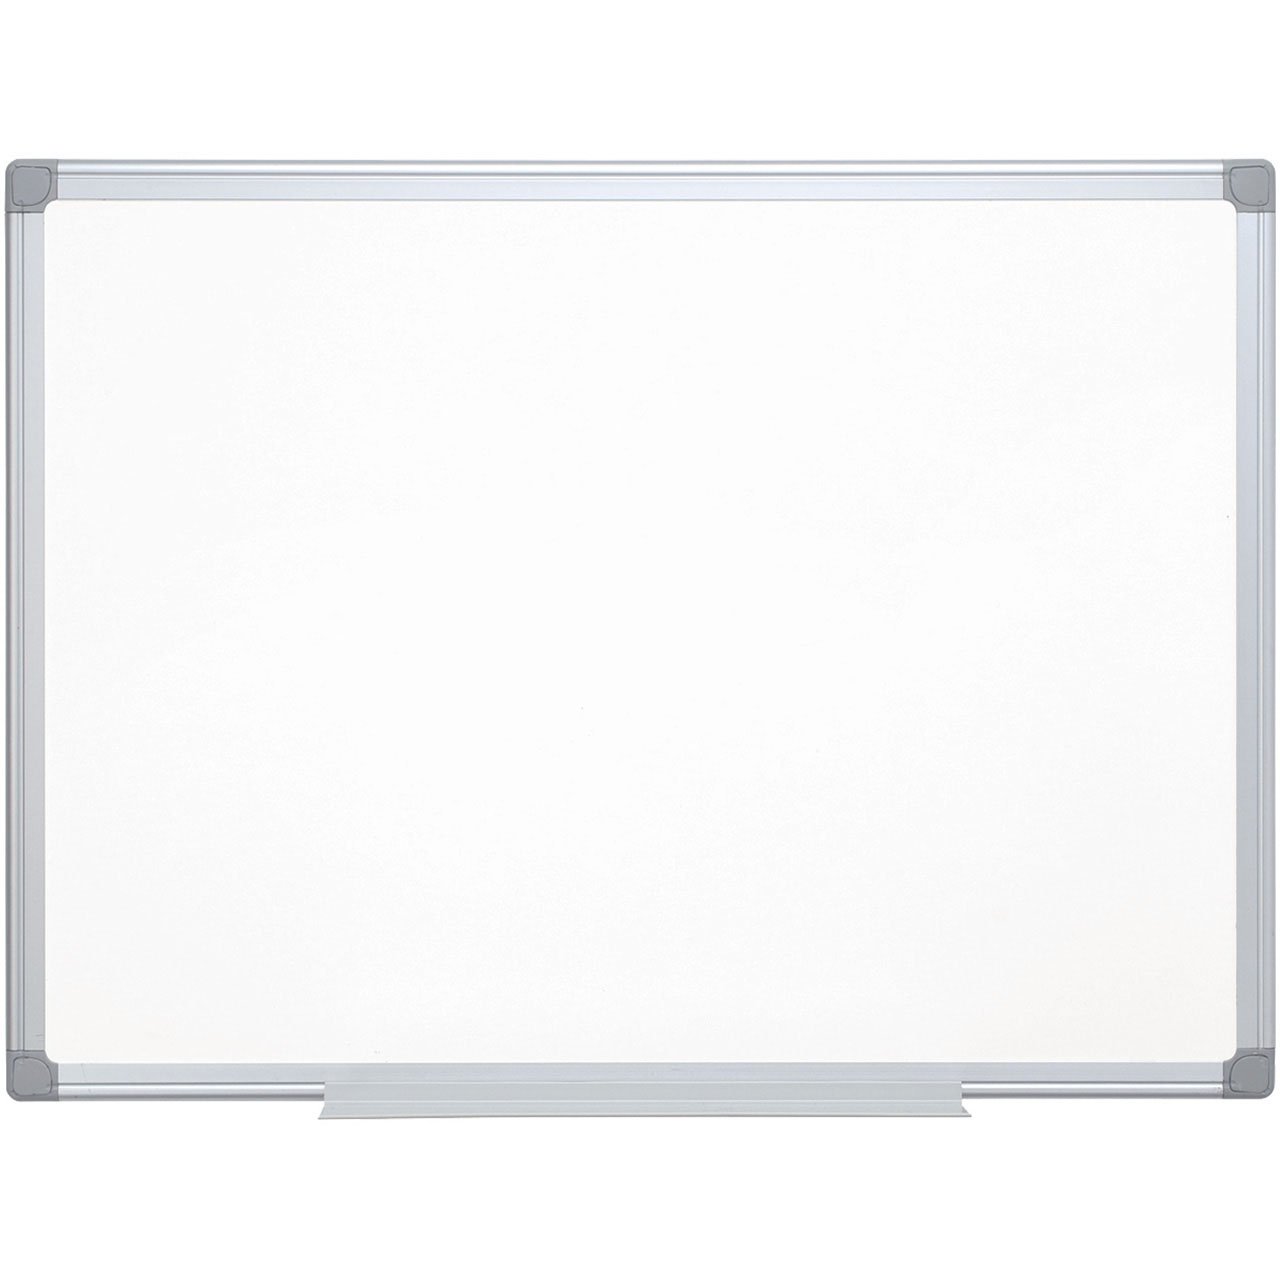 Q-connect emaljeret whiteboardtavle 1200 mm x 1800 mm, Stål/Aluminium